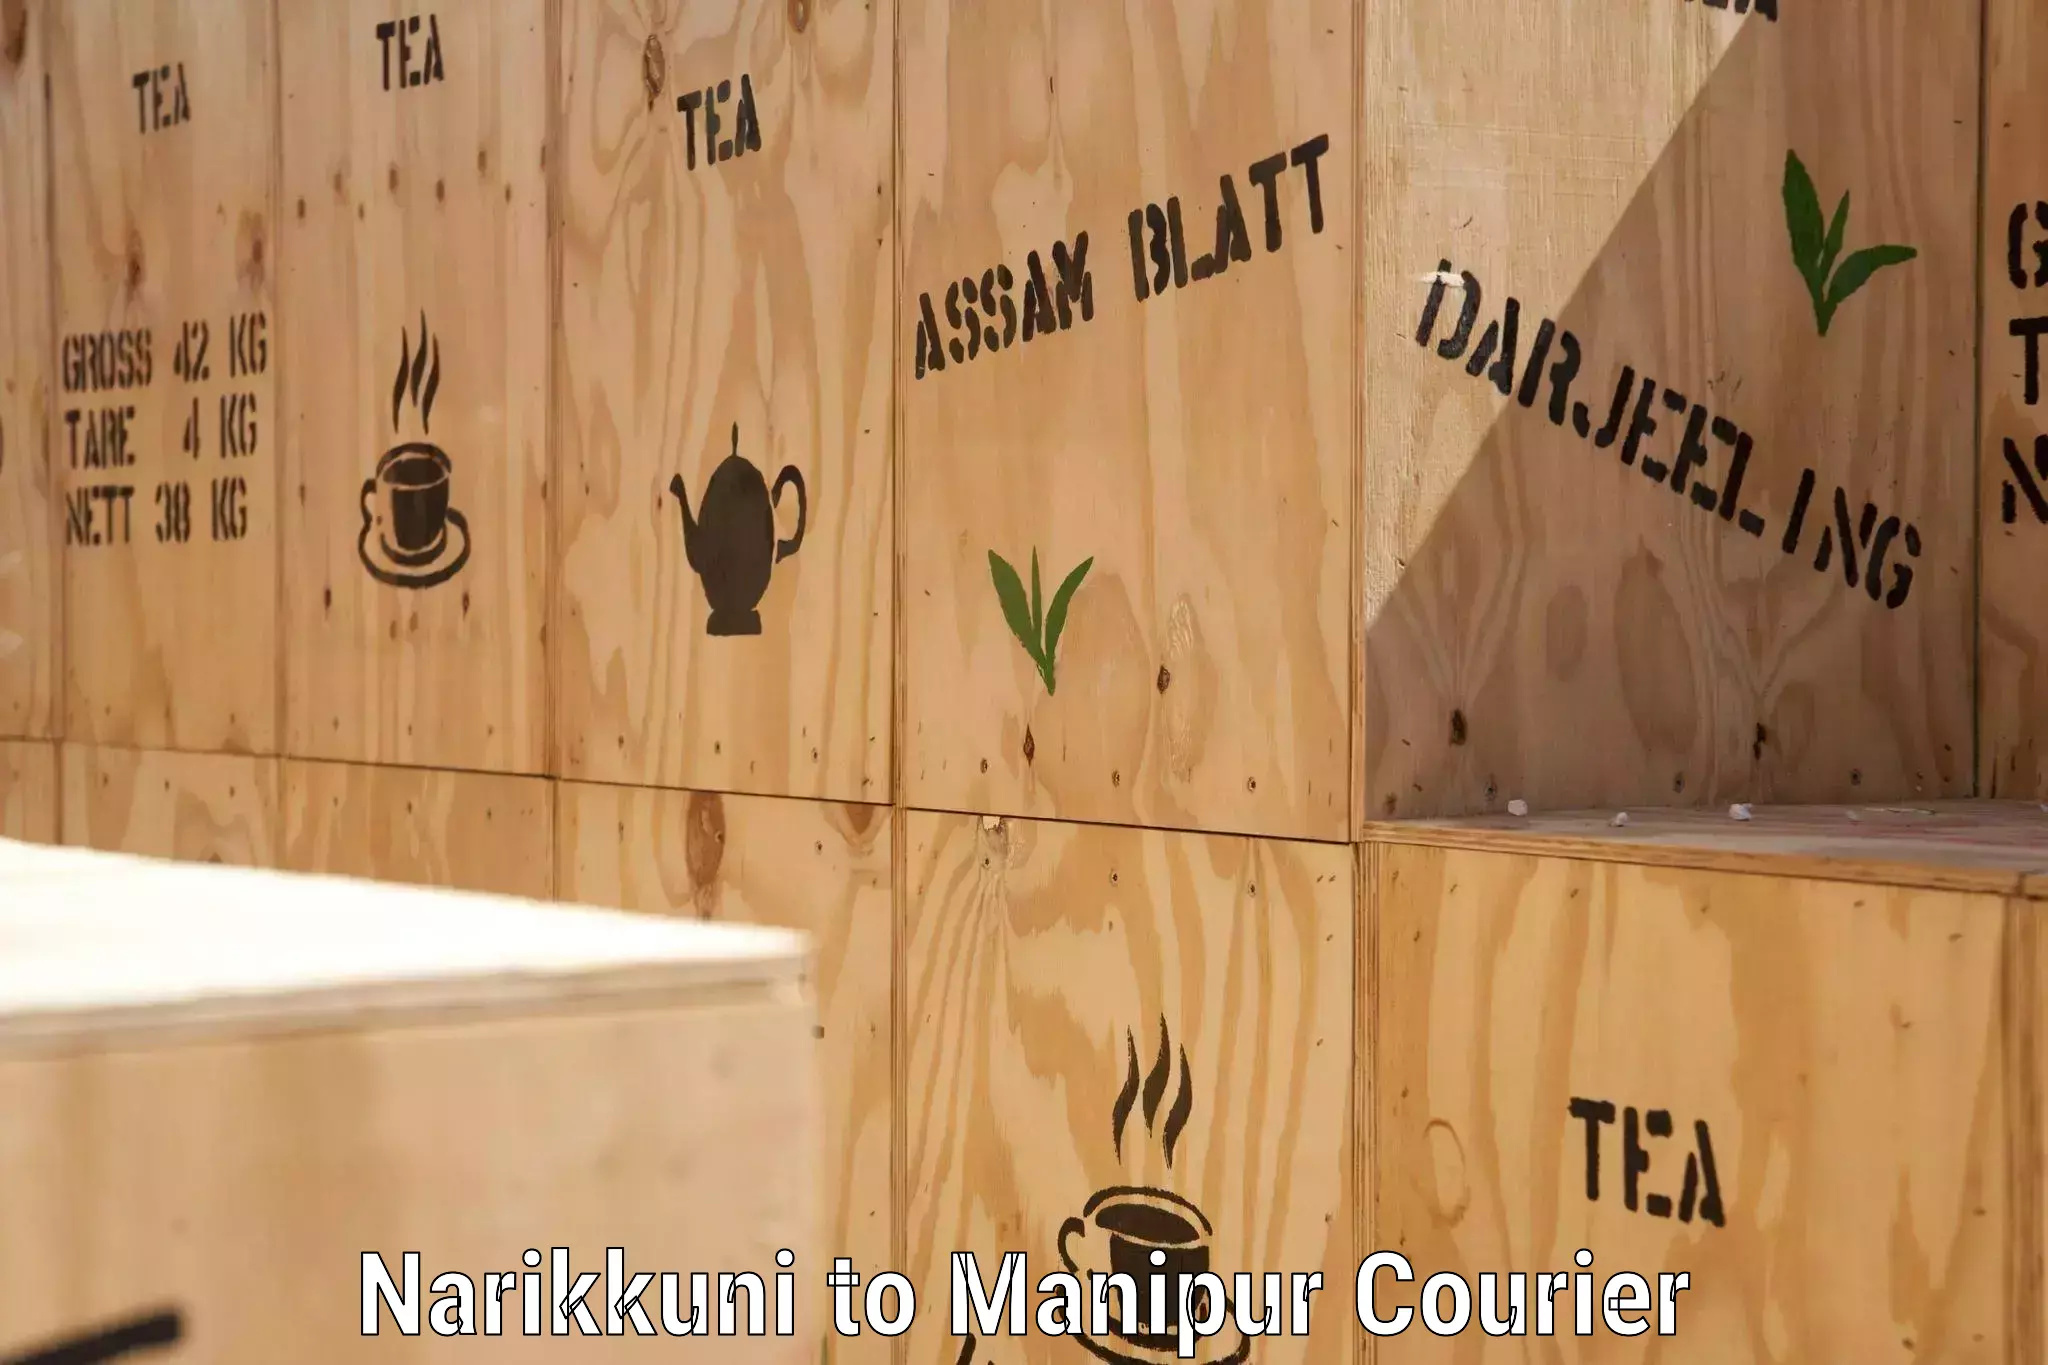 Professional courier handling Narikkuni to Manipur